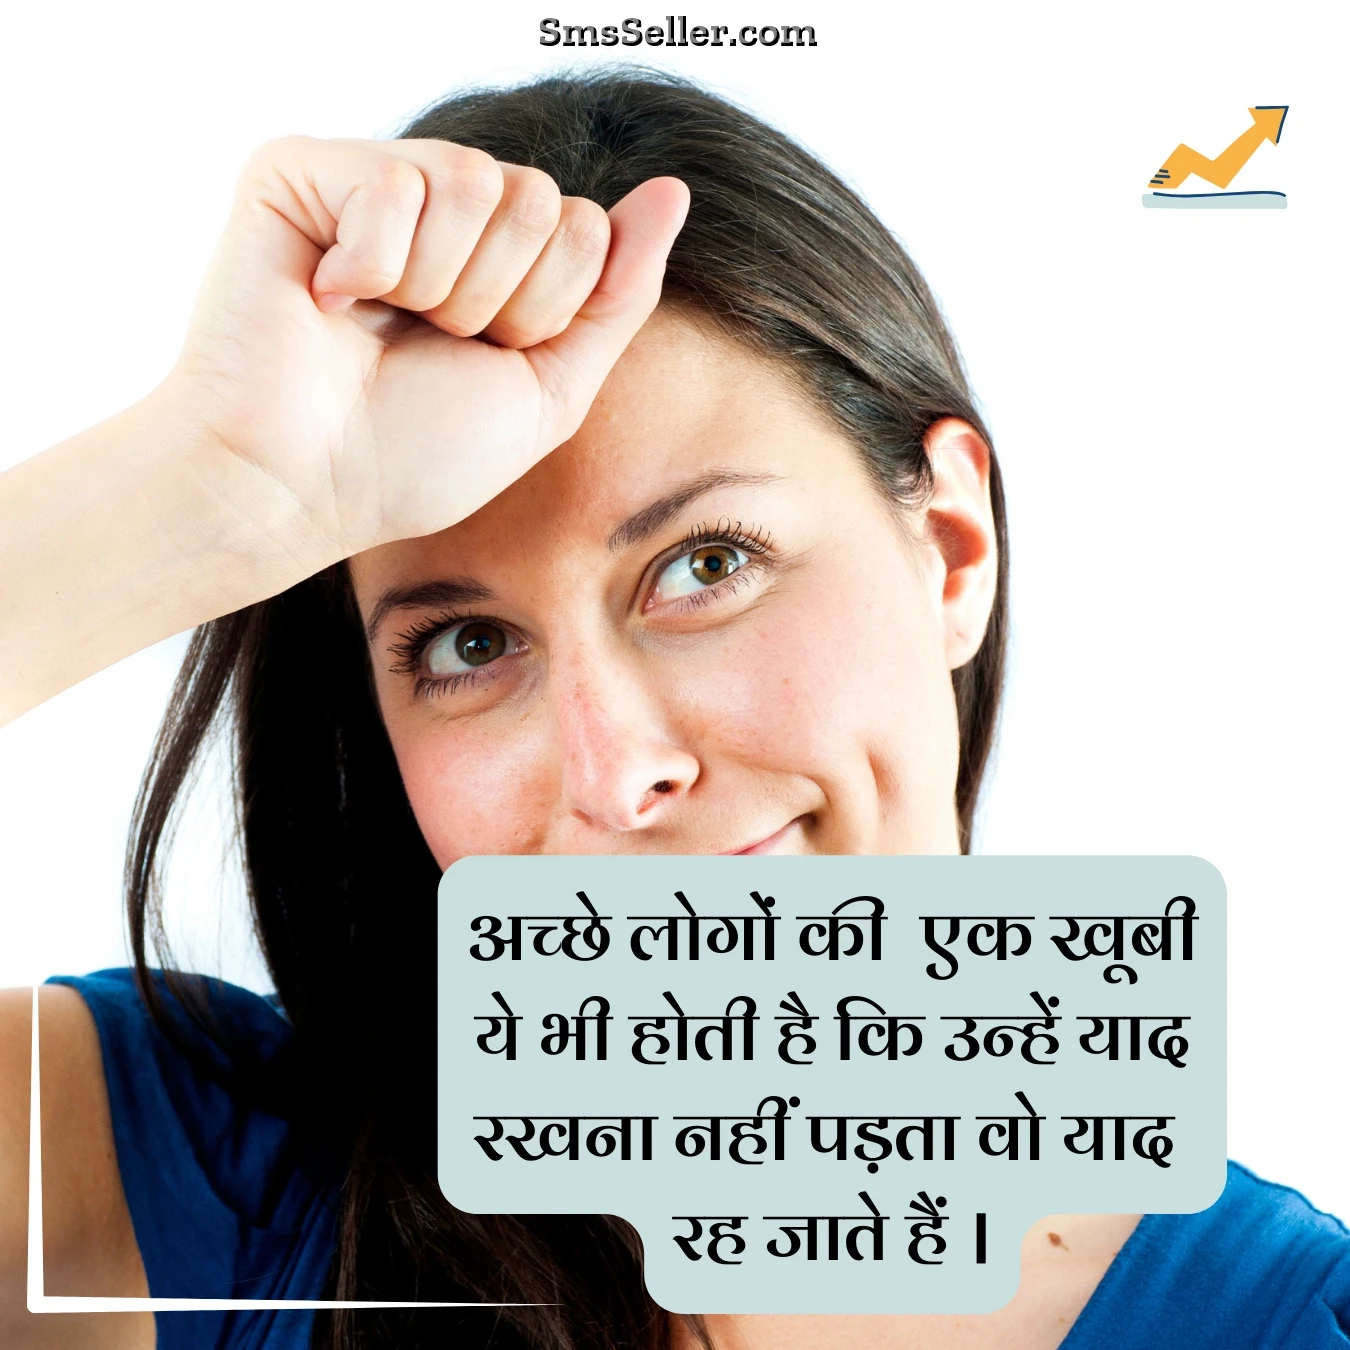 relationship quotes in hindi acche logon ki khoobee